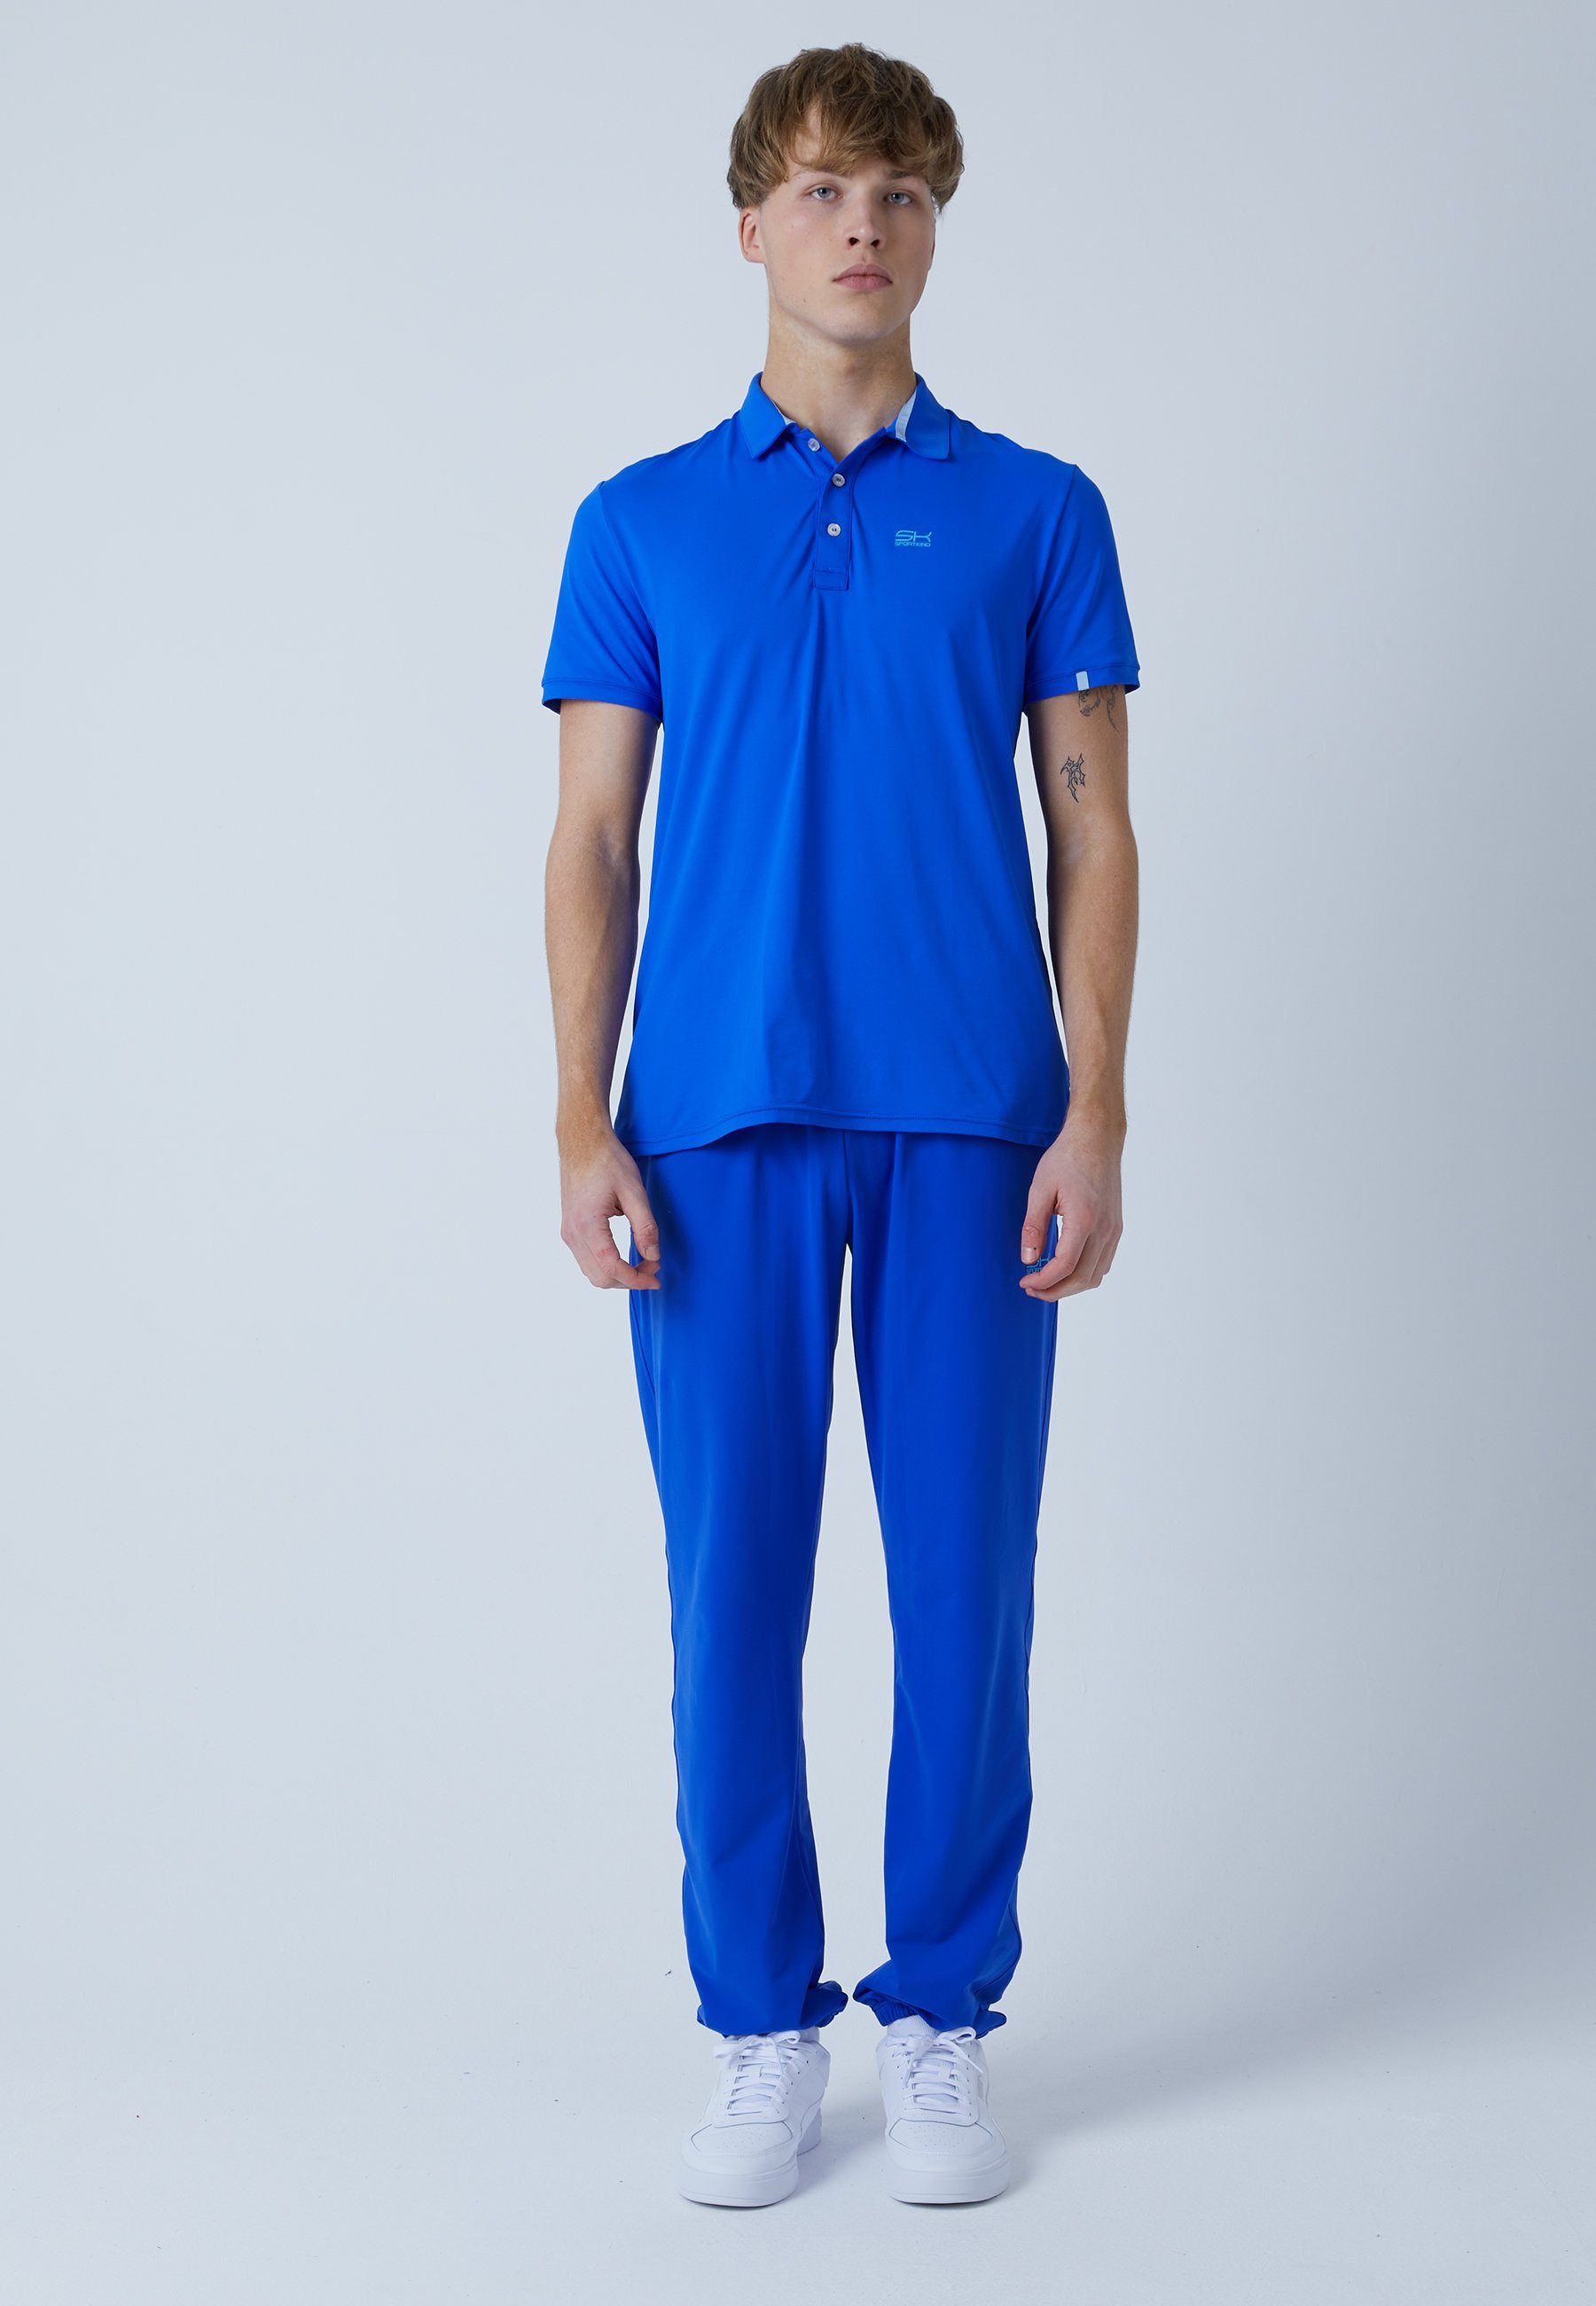 Golf Herren Funktionsshirt SPORTKIND & Shirt Kurzarm Jungen kobaltblau Polo